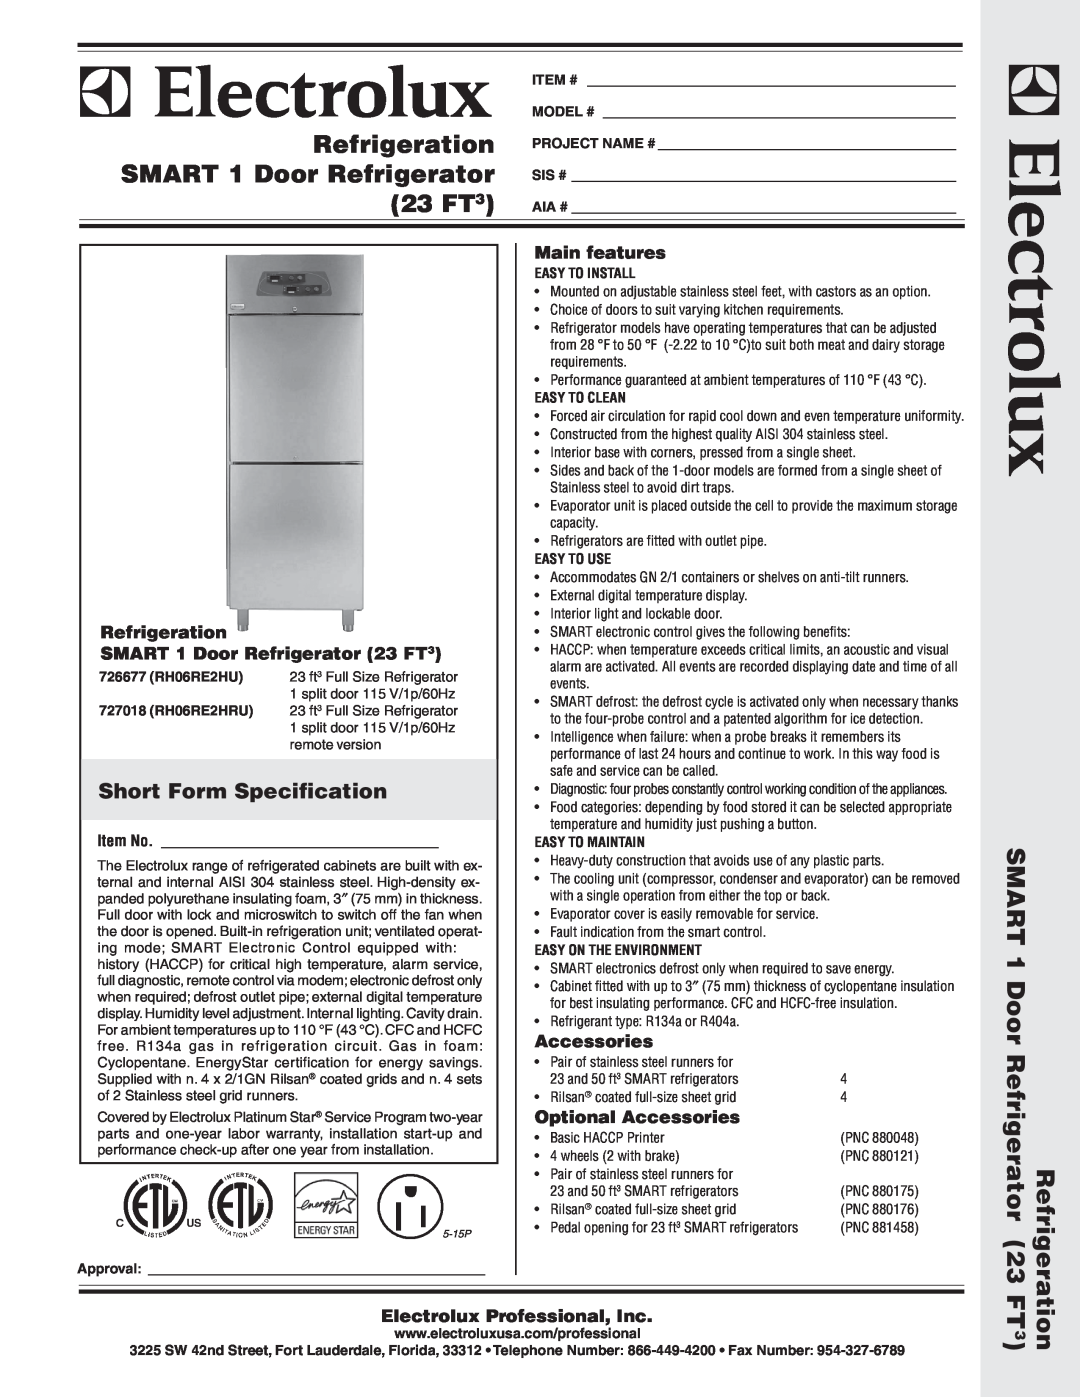 Electrolux 727018, 726677 warranty Short Form Specification, Refrigeration SMART 1 Door Refrigerator 23 FT3, Main features 